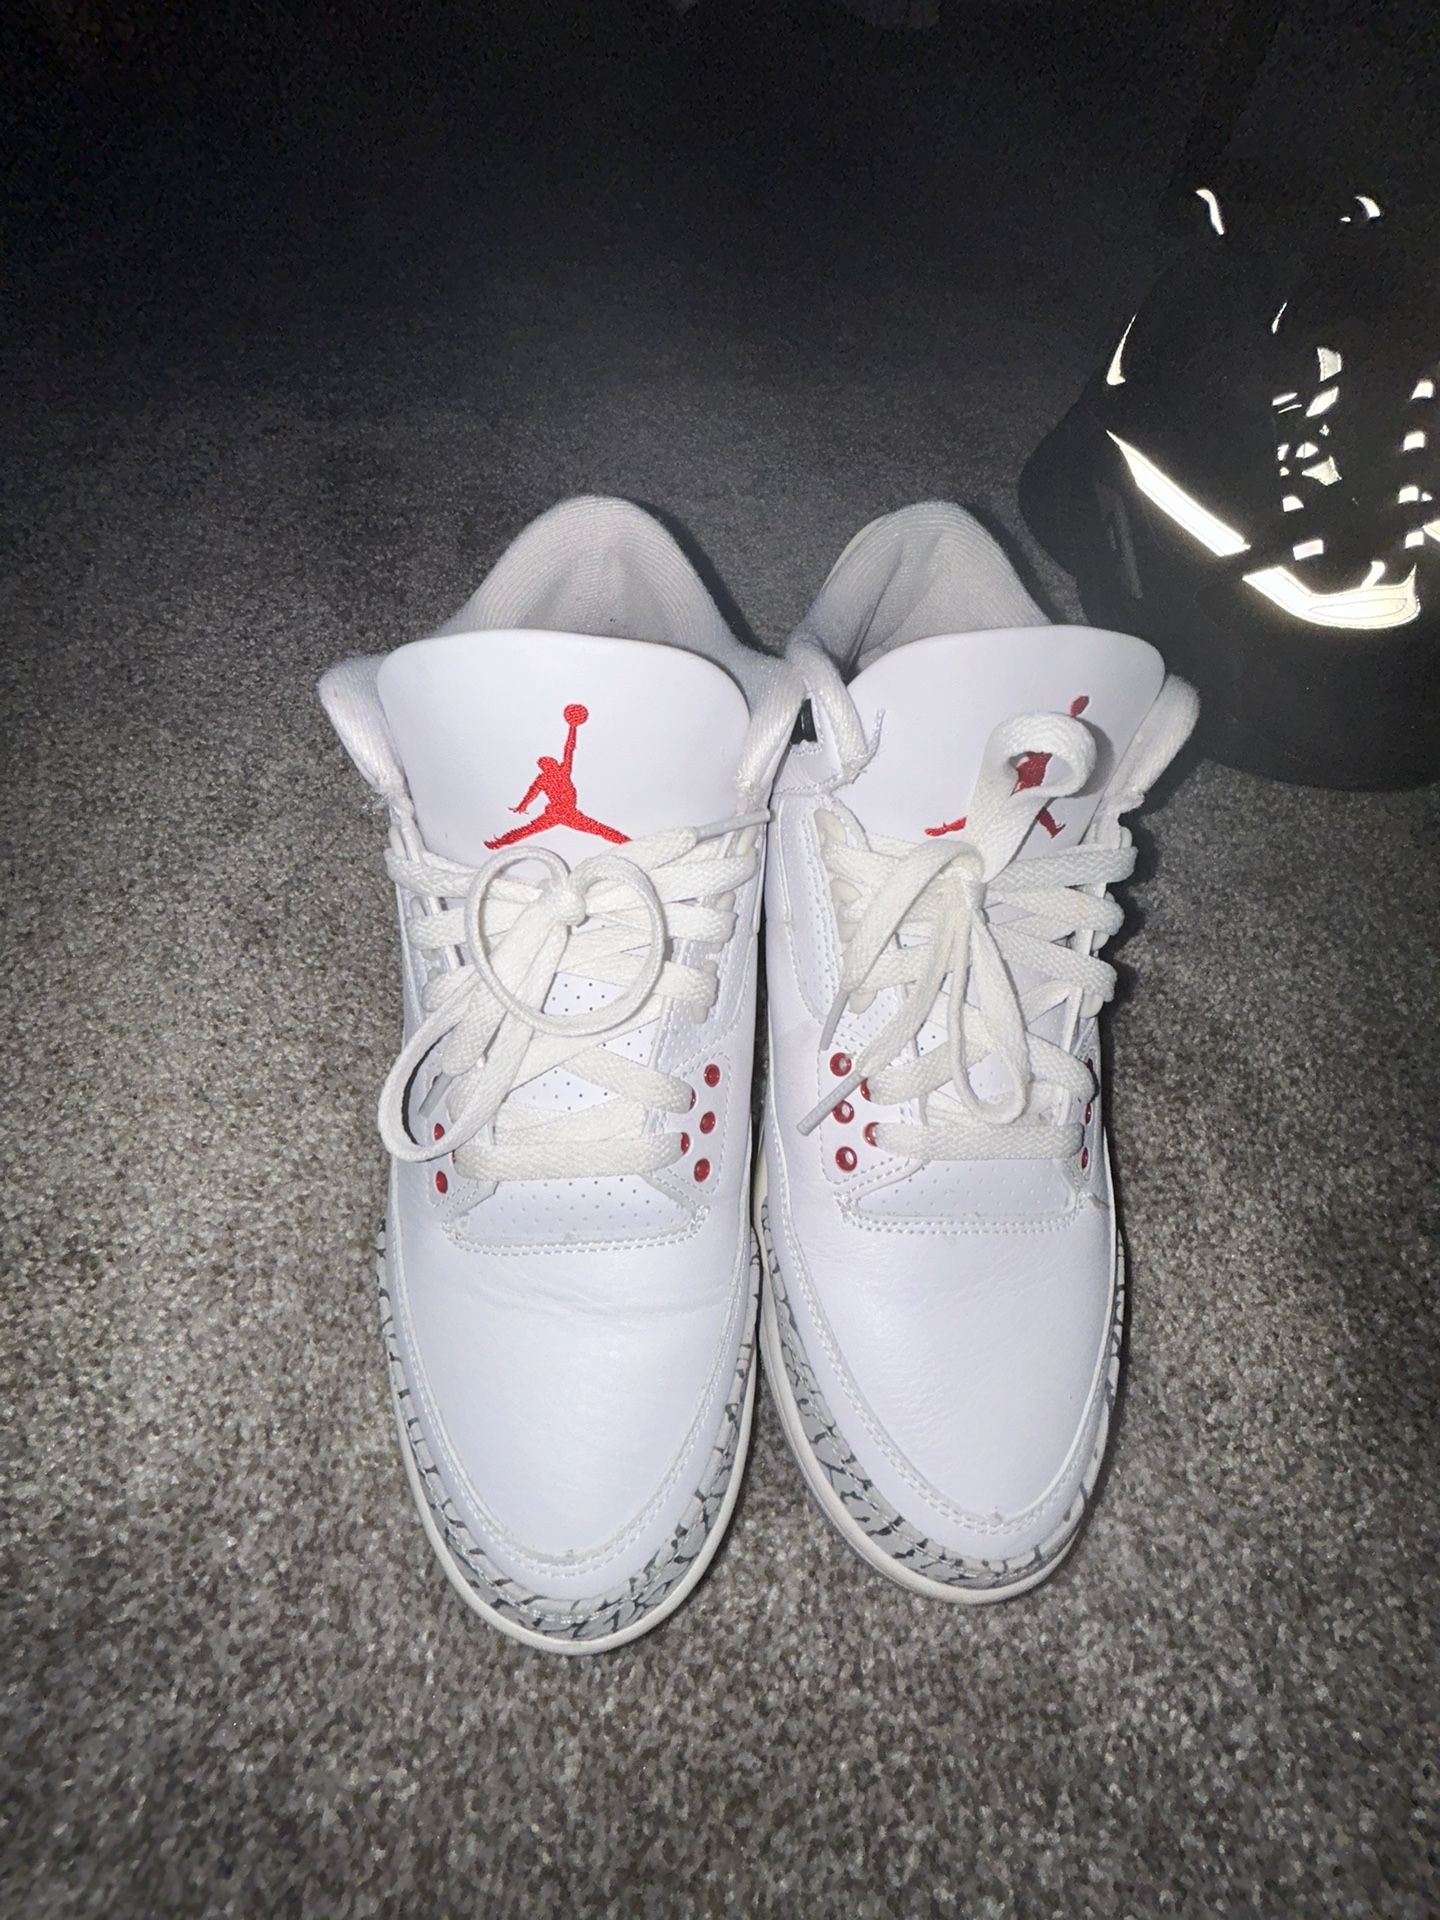 Jordan 3 Reimagined White Cement Size 10 Mens